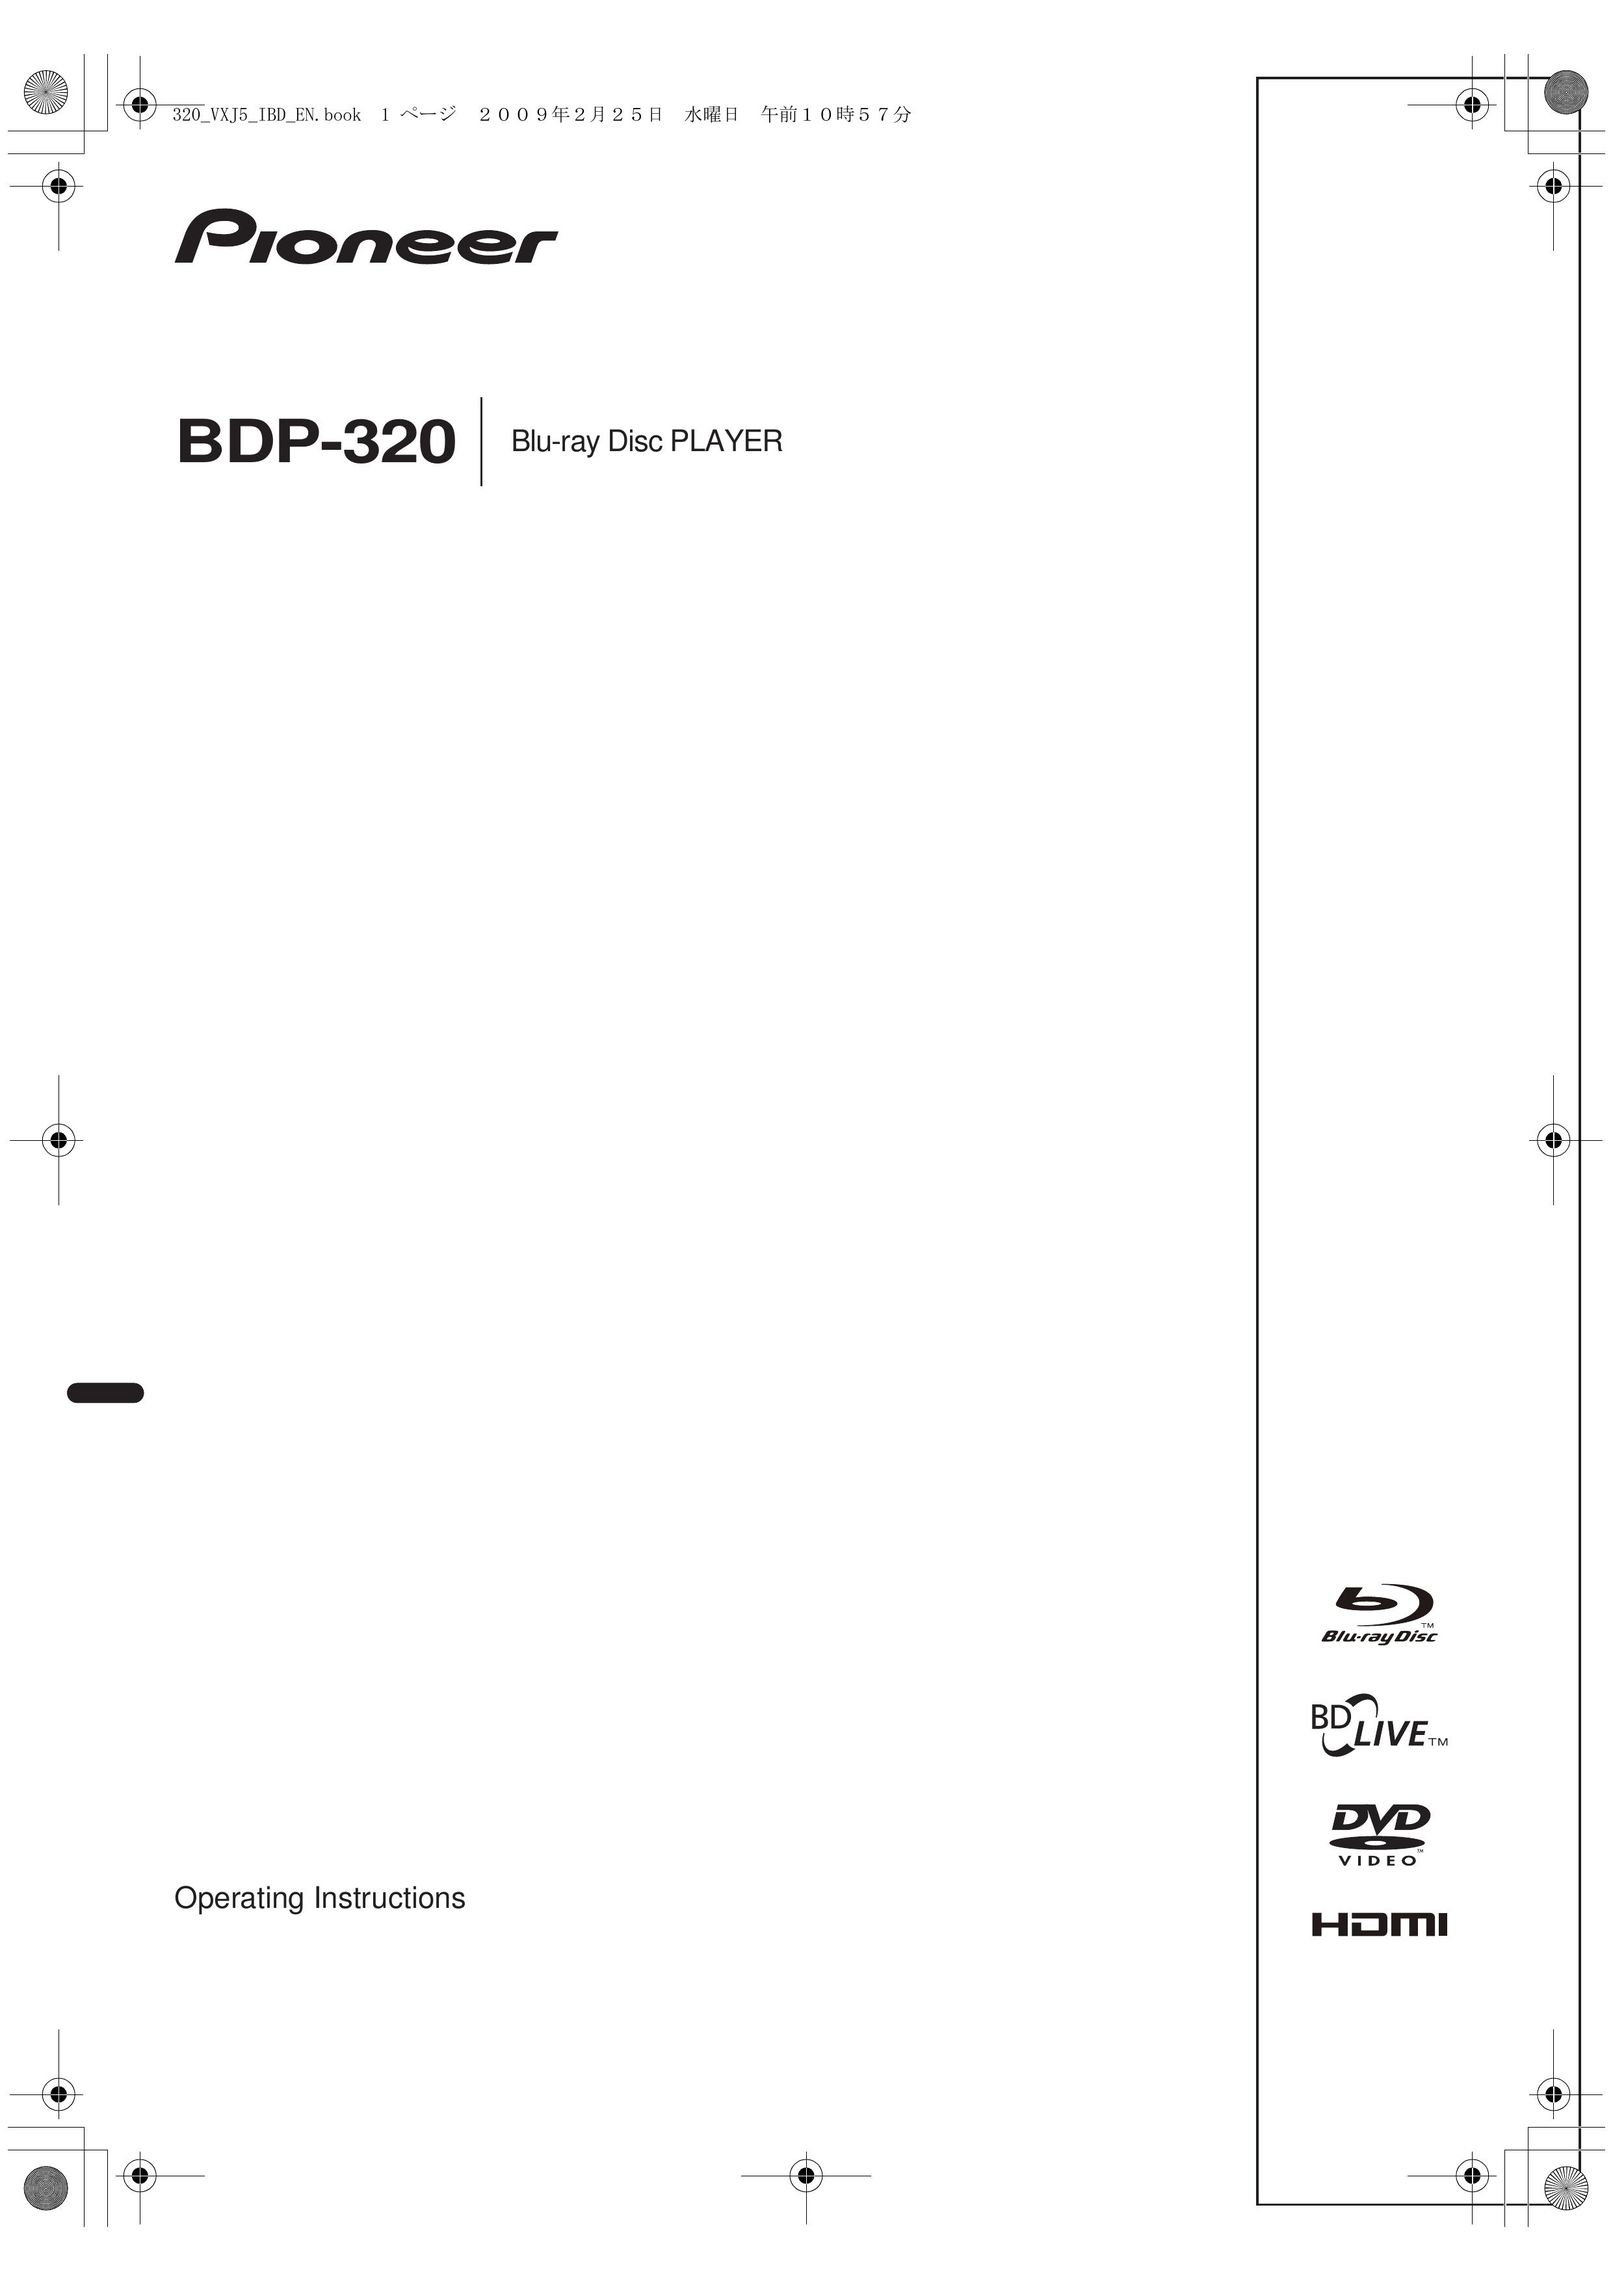 Pioneer BDP-320 DVD Player User Manual